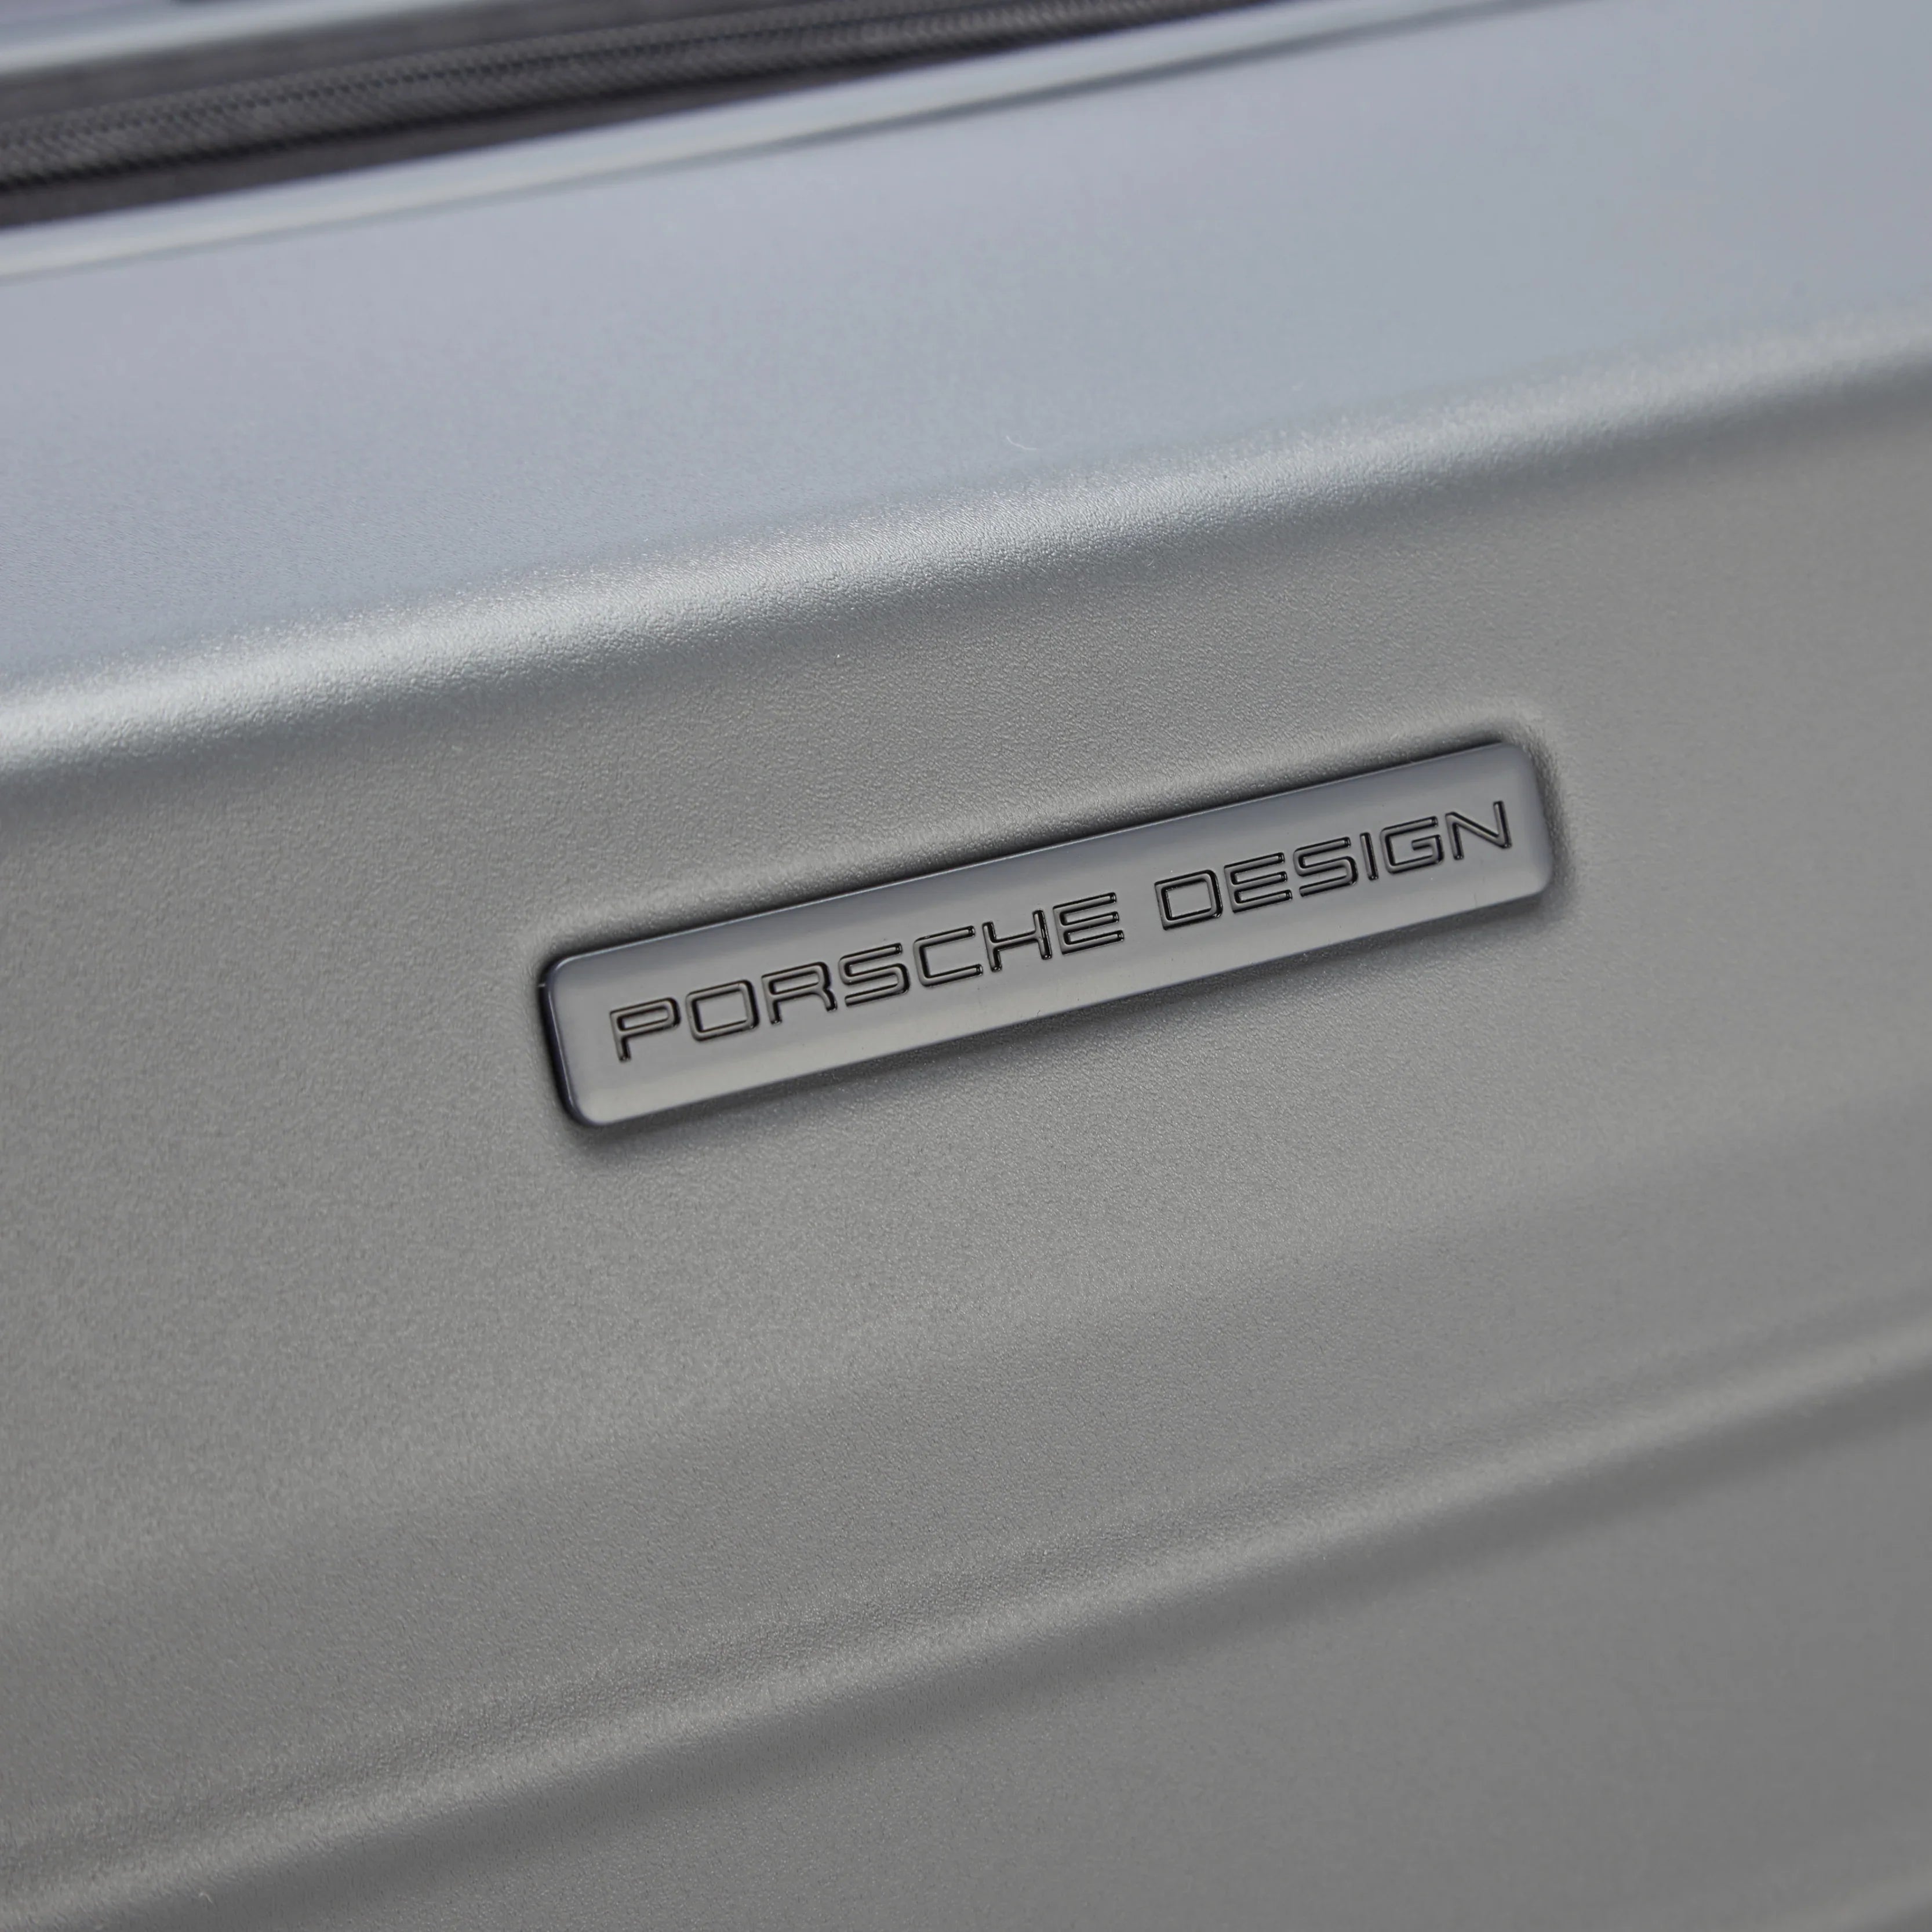 Porsche Design Roadster Hardcase Valise 4 roues 82 cm - Noir Mat